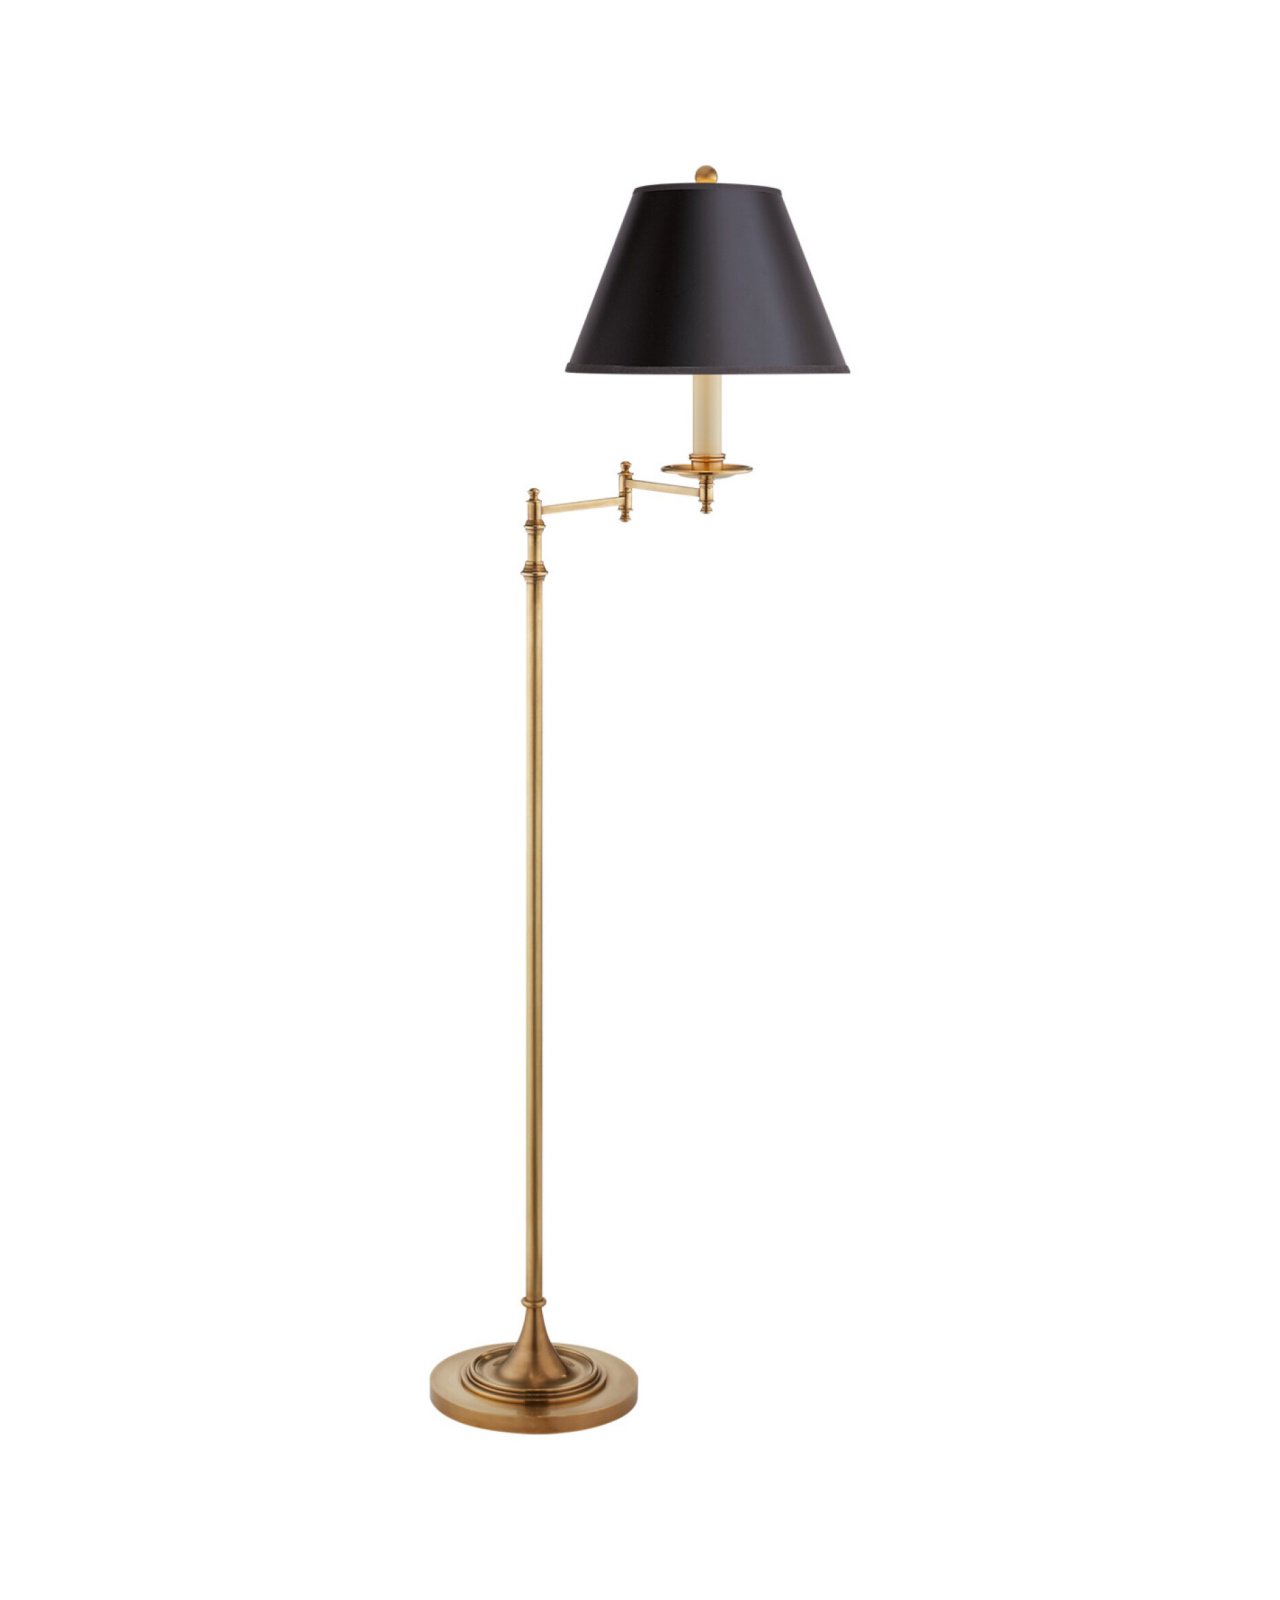 Dorchester Swing Arm Floor Lamp Antique Brass